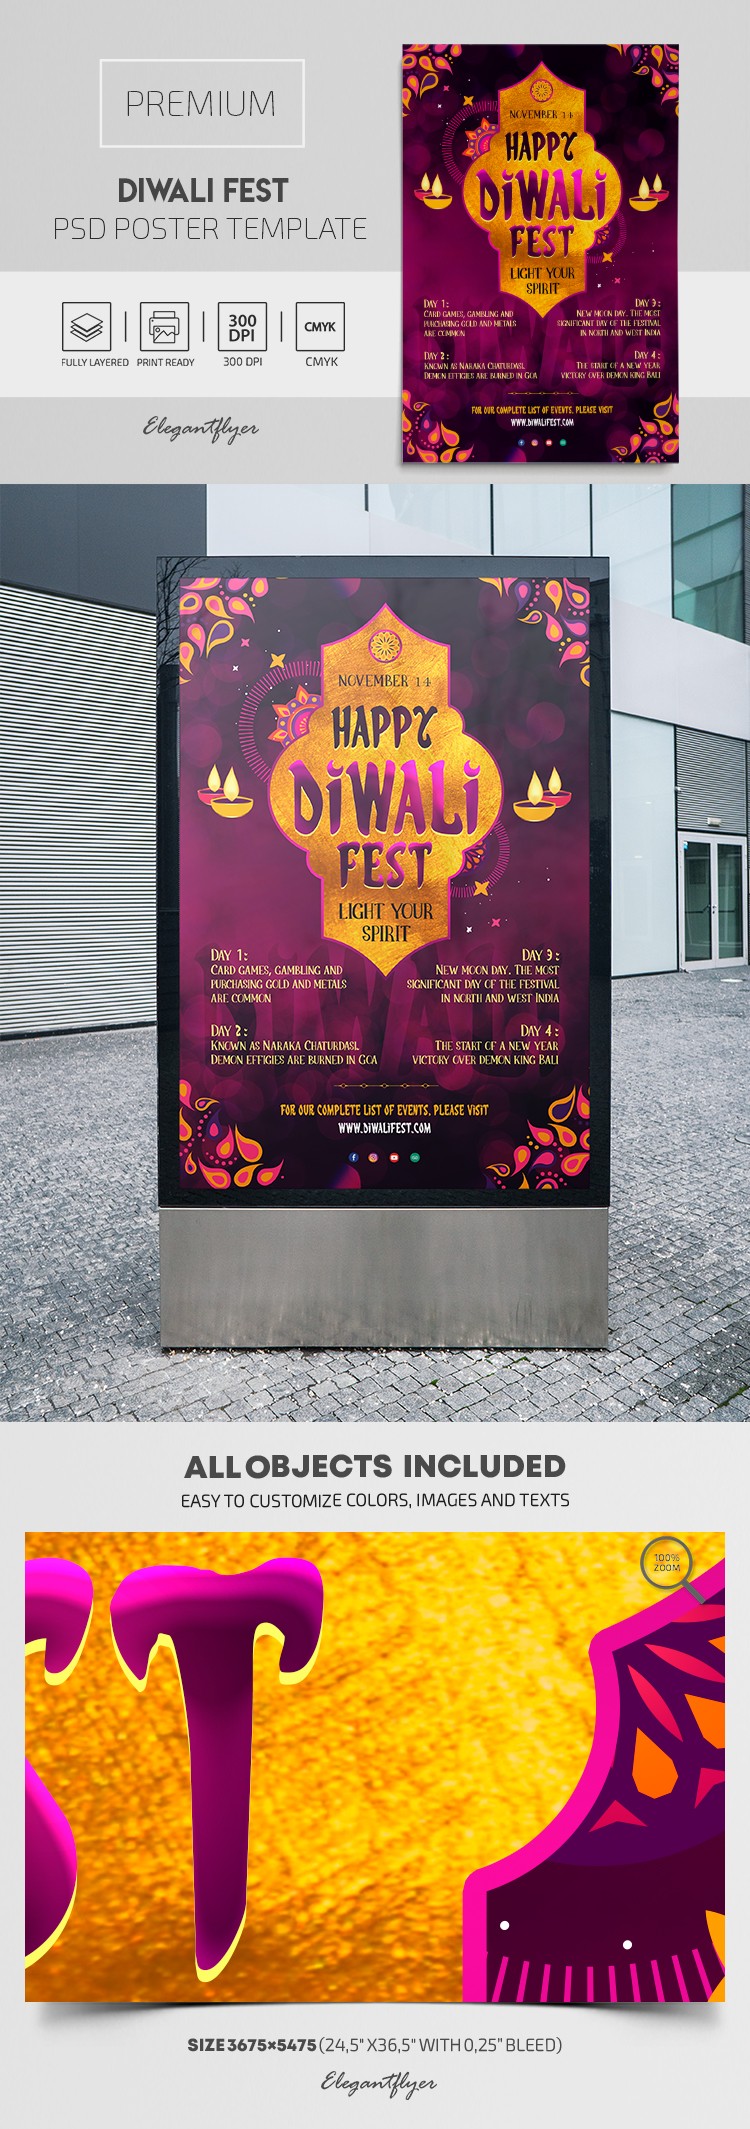 Plakat Diwali Fest by ElegantFlyer